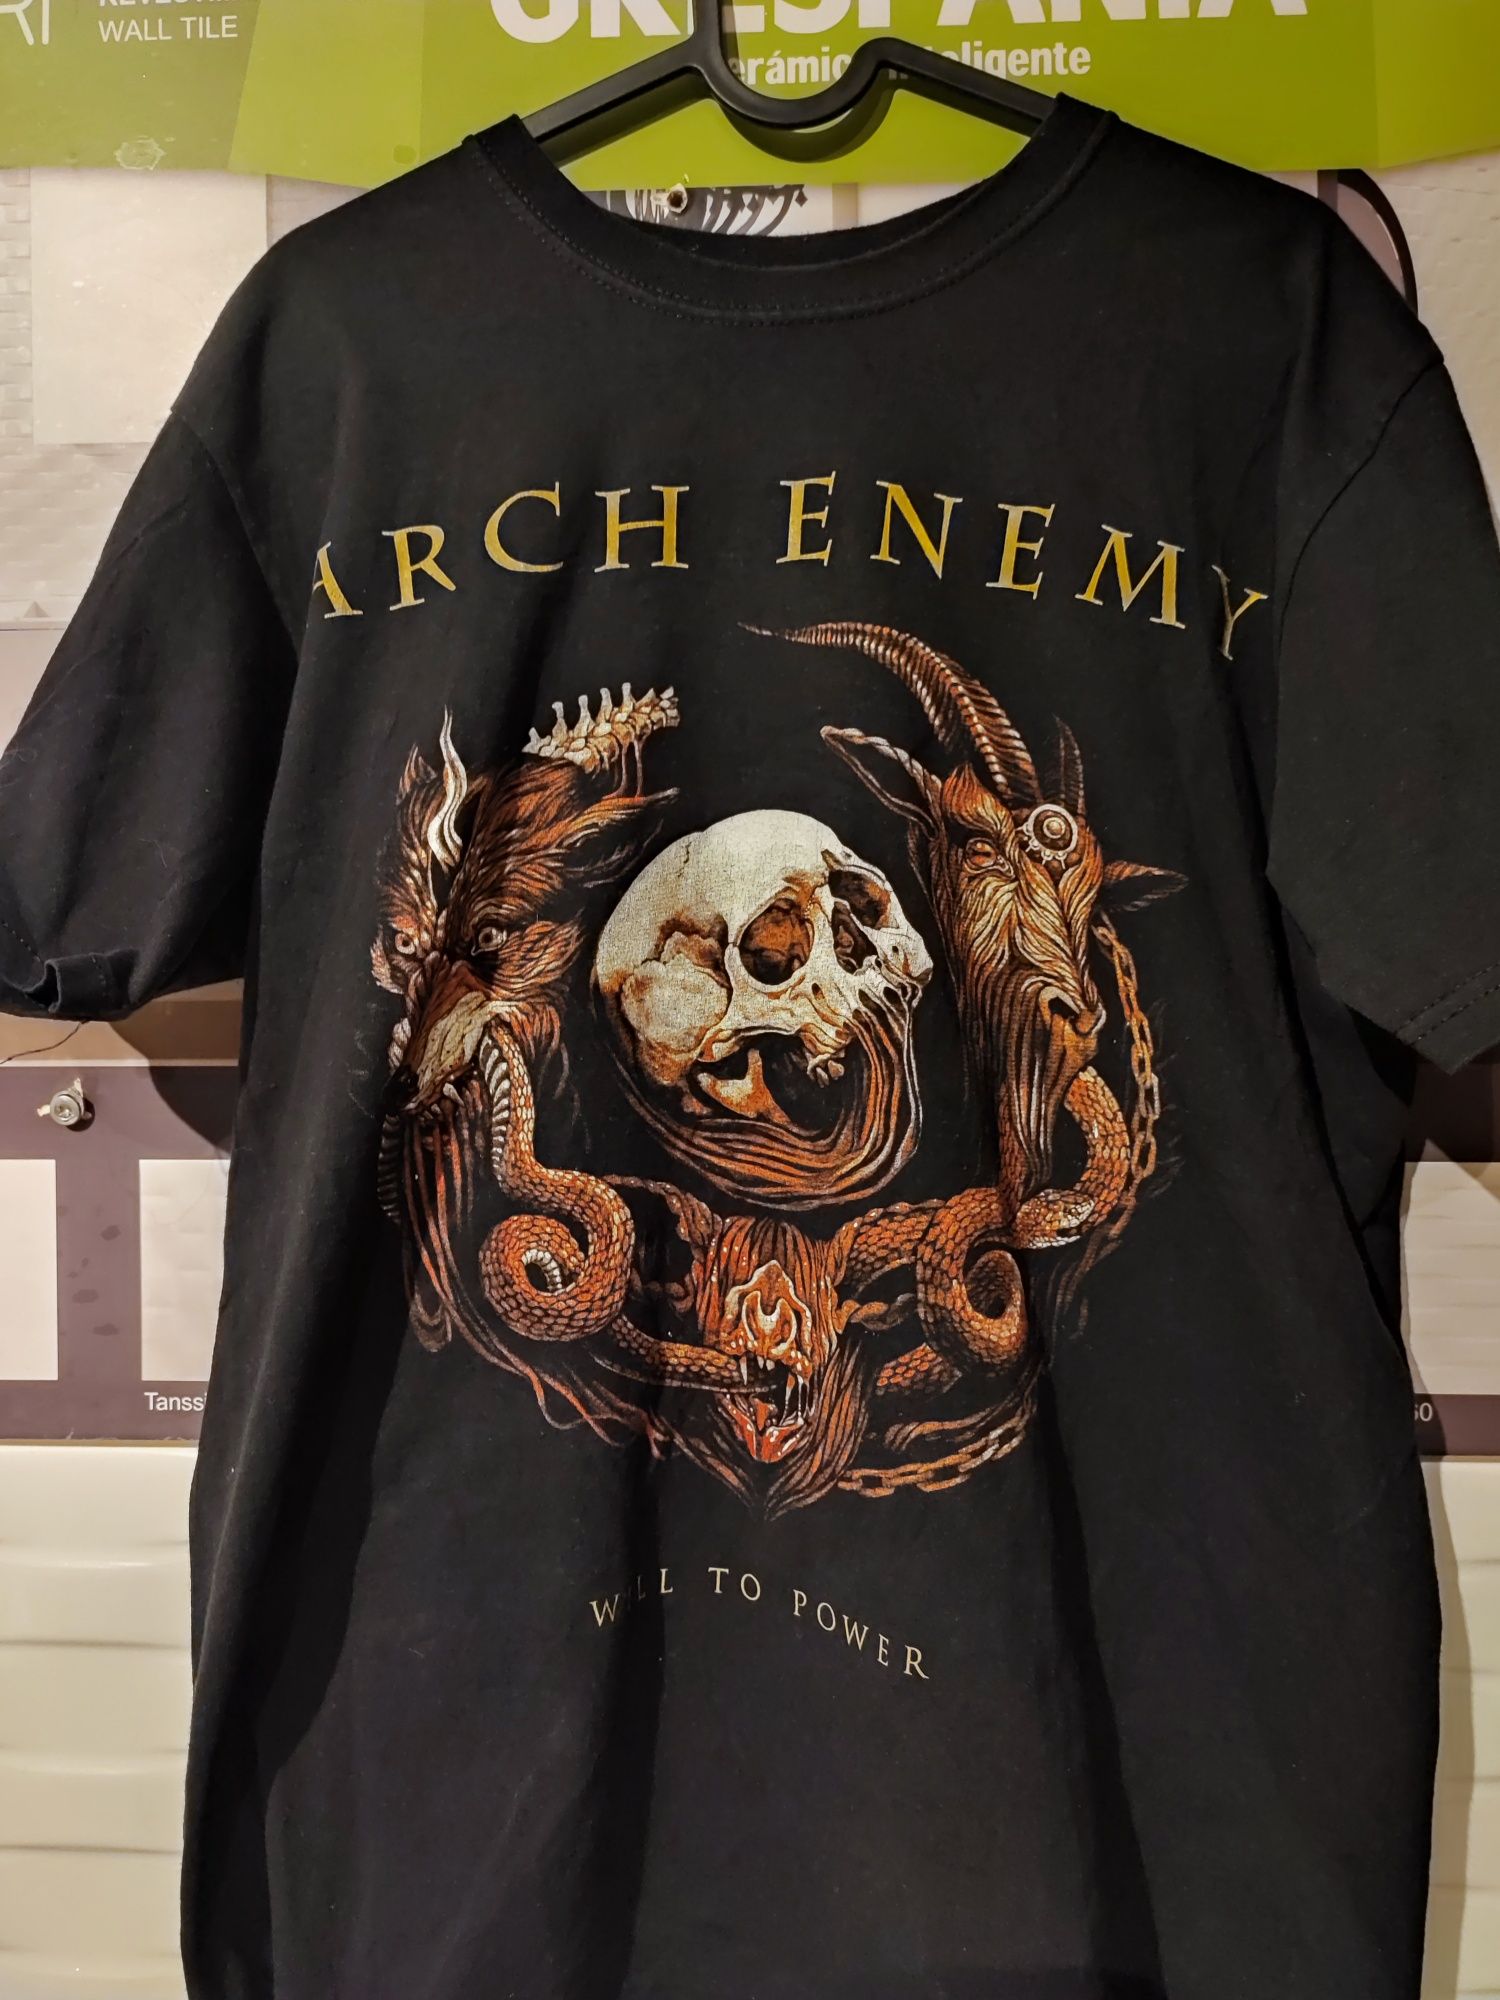 Arch Enemy 2018 tour